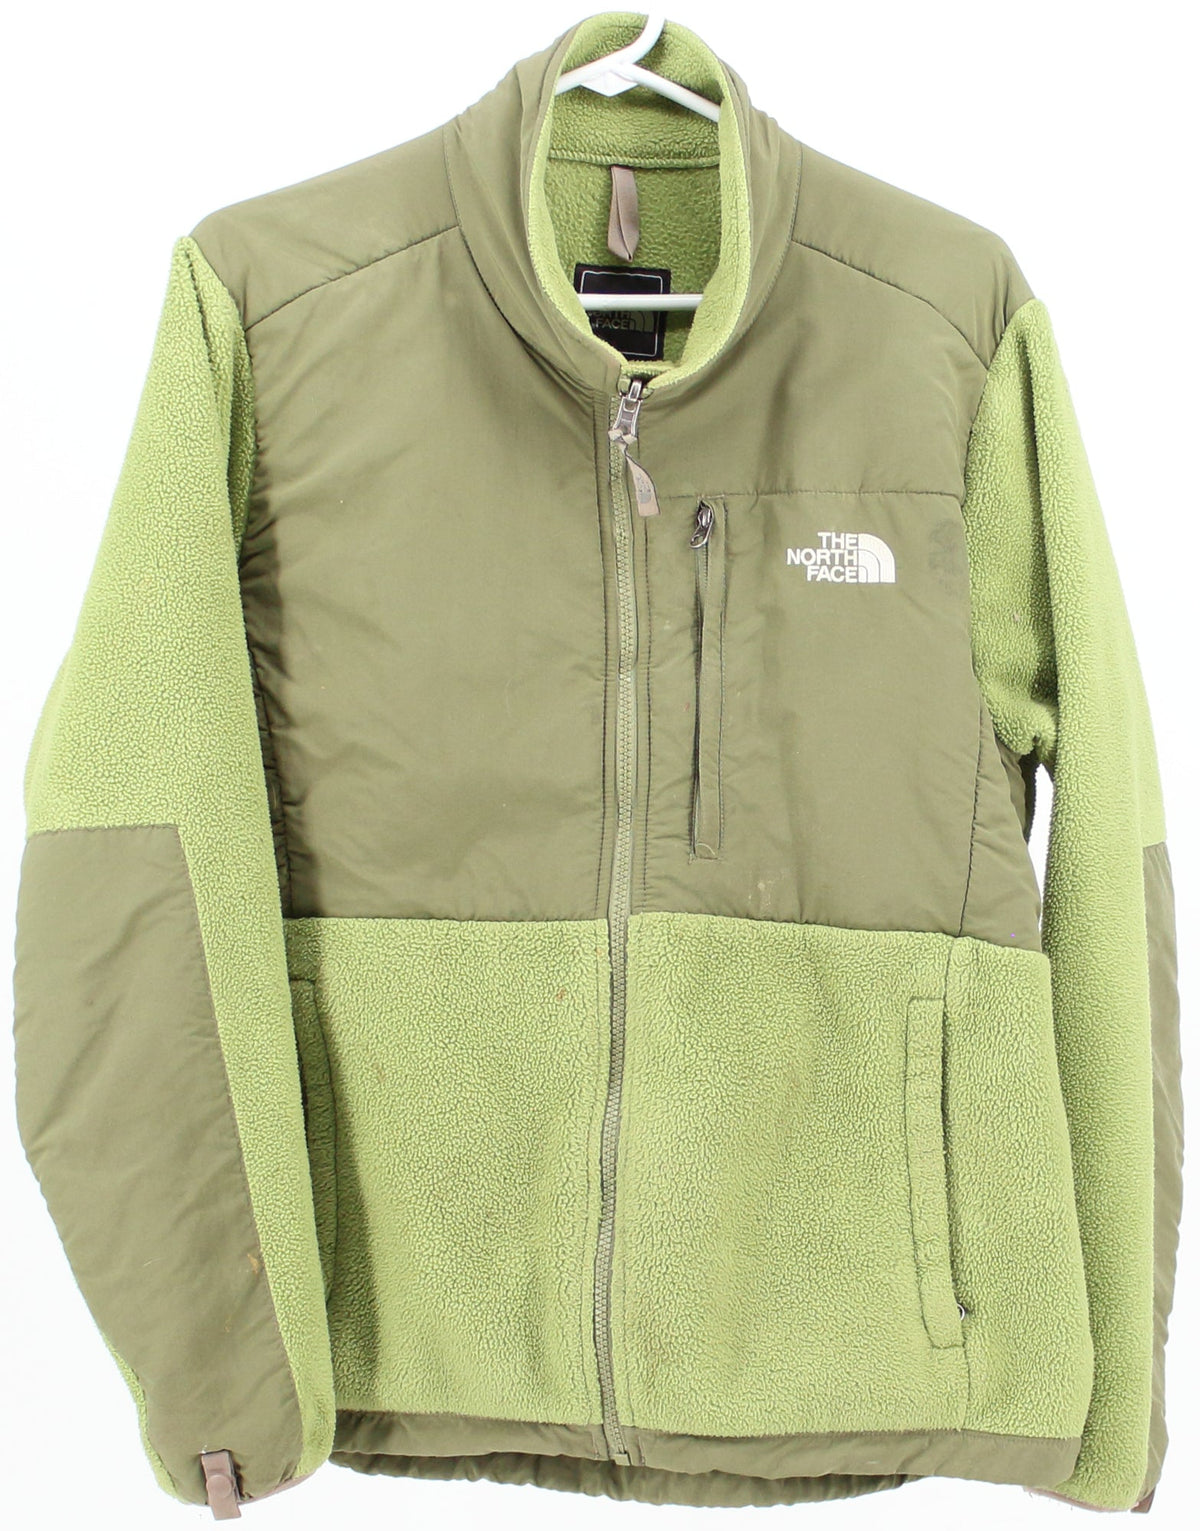 The North Face Women's Apple Green Fleece and Nylon Jacket